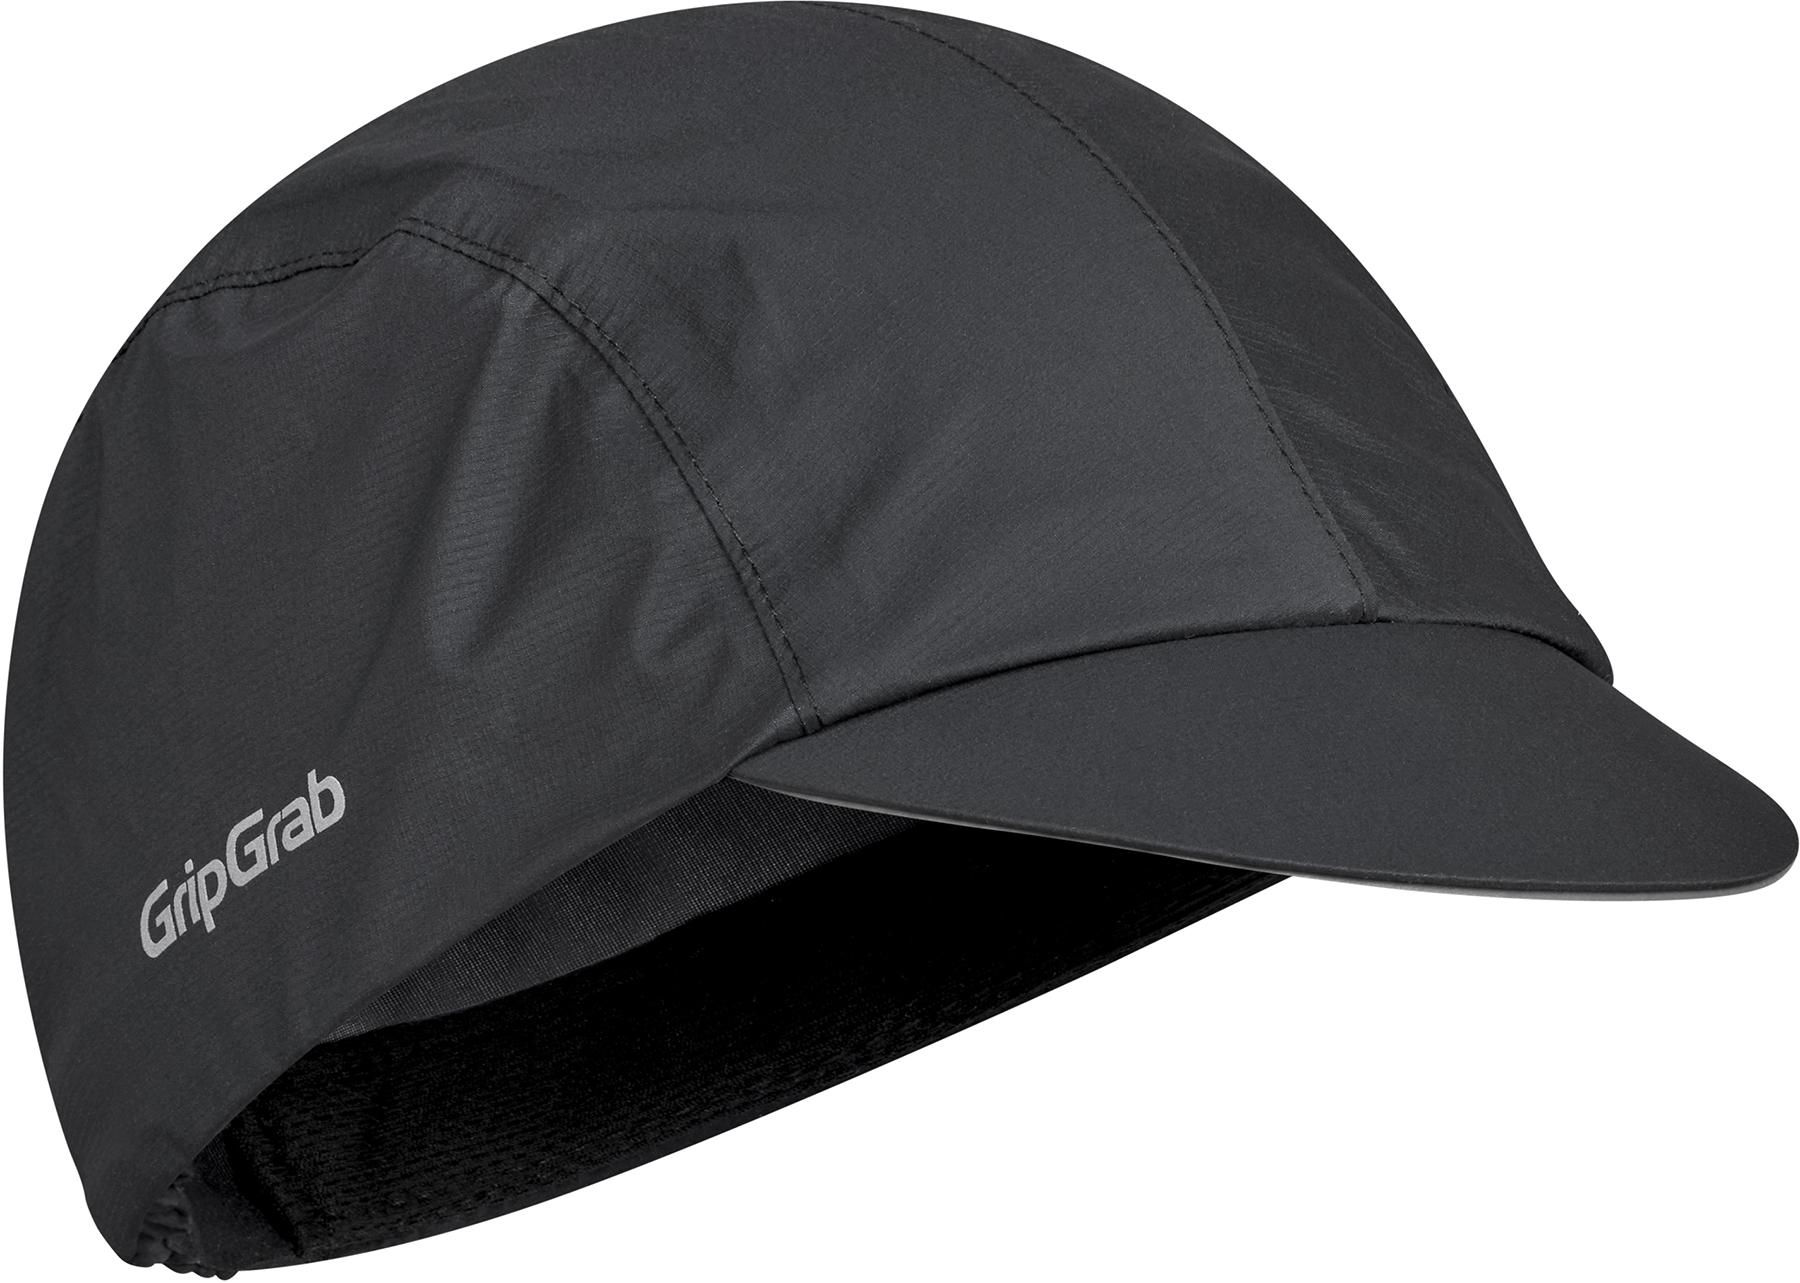 Gripgrab Aquashield Waterproof Cycling Cap - Black